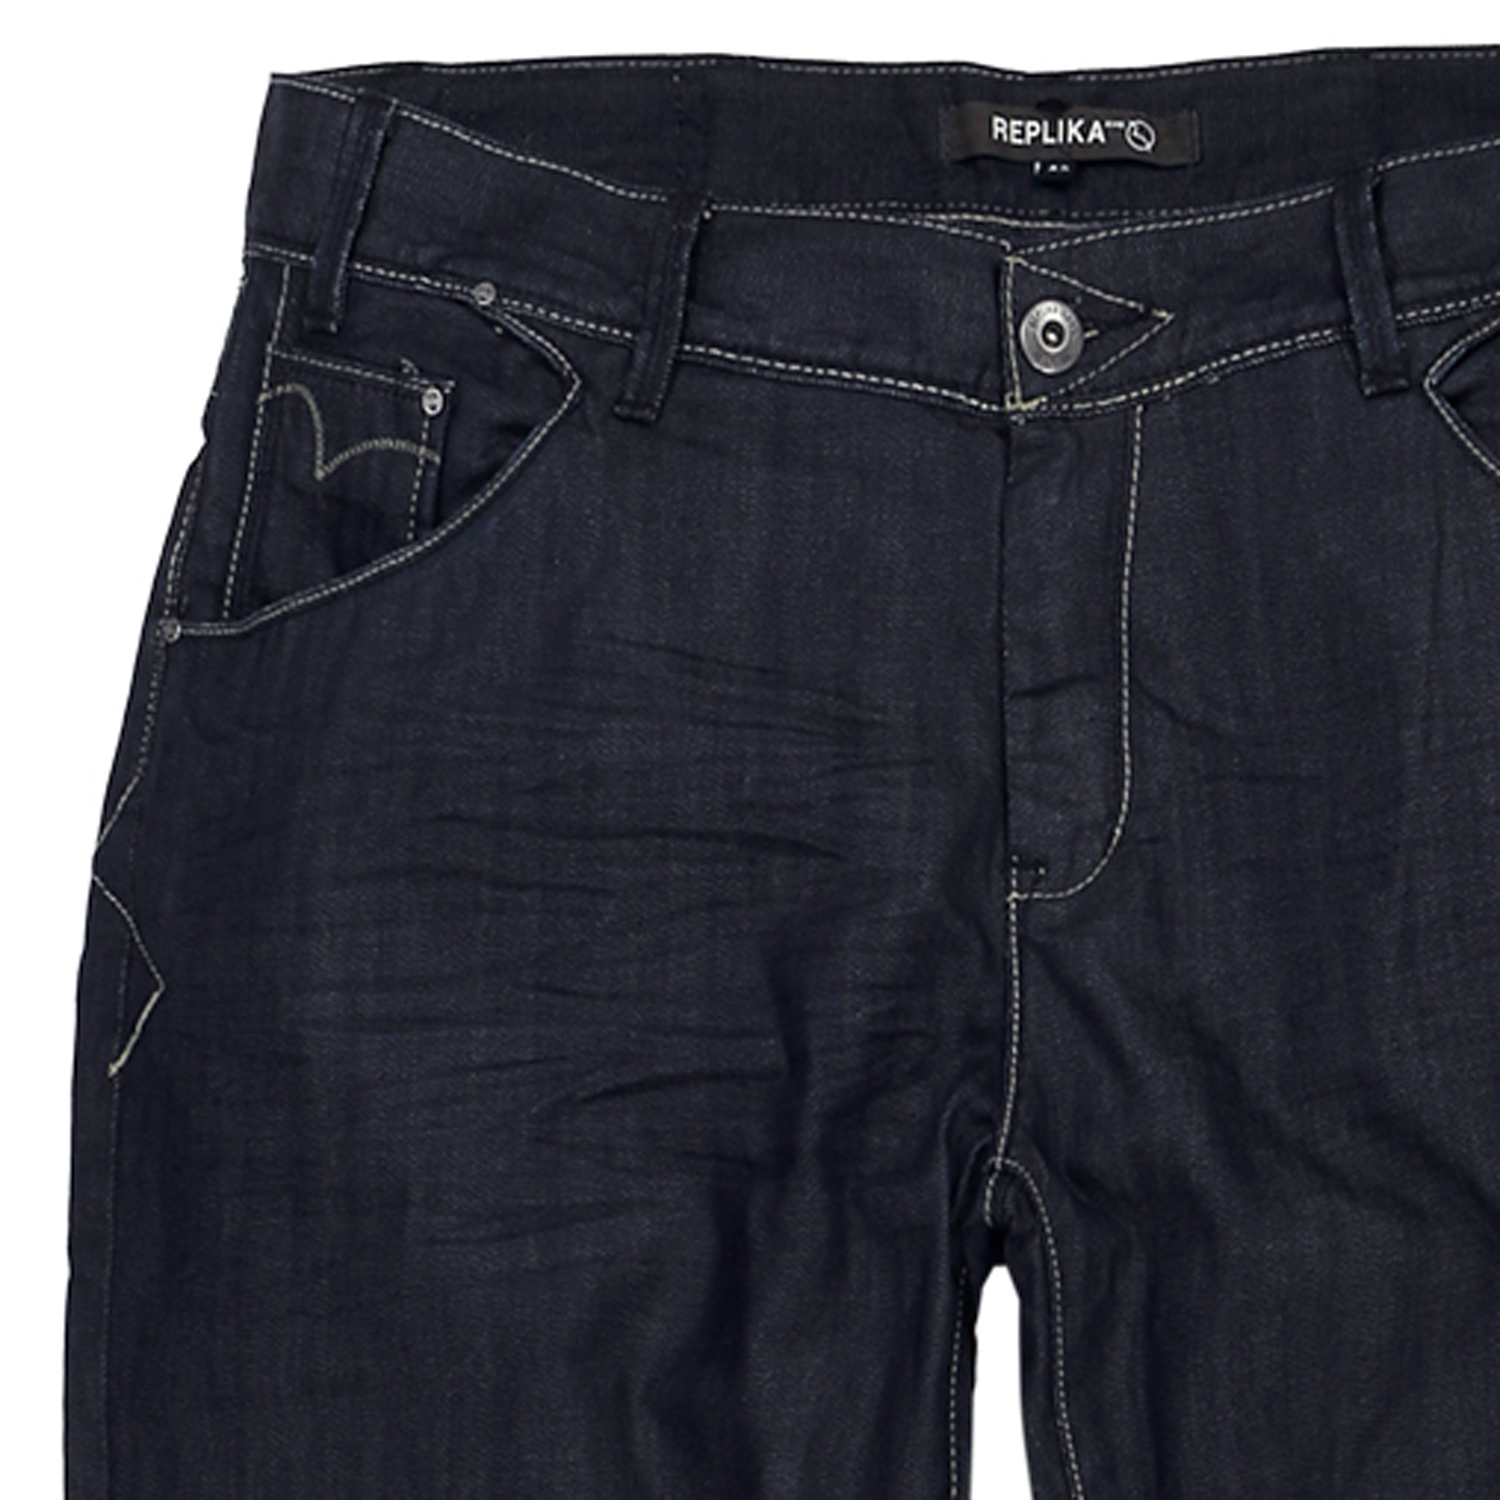 Dark blue jeans by Replika - large sizes